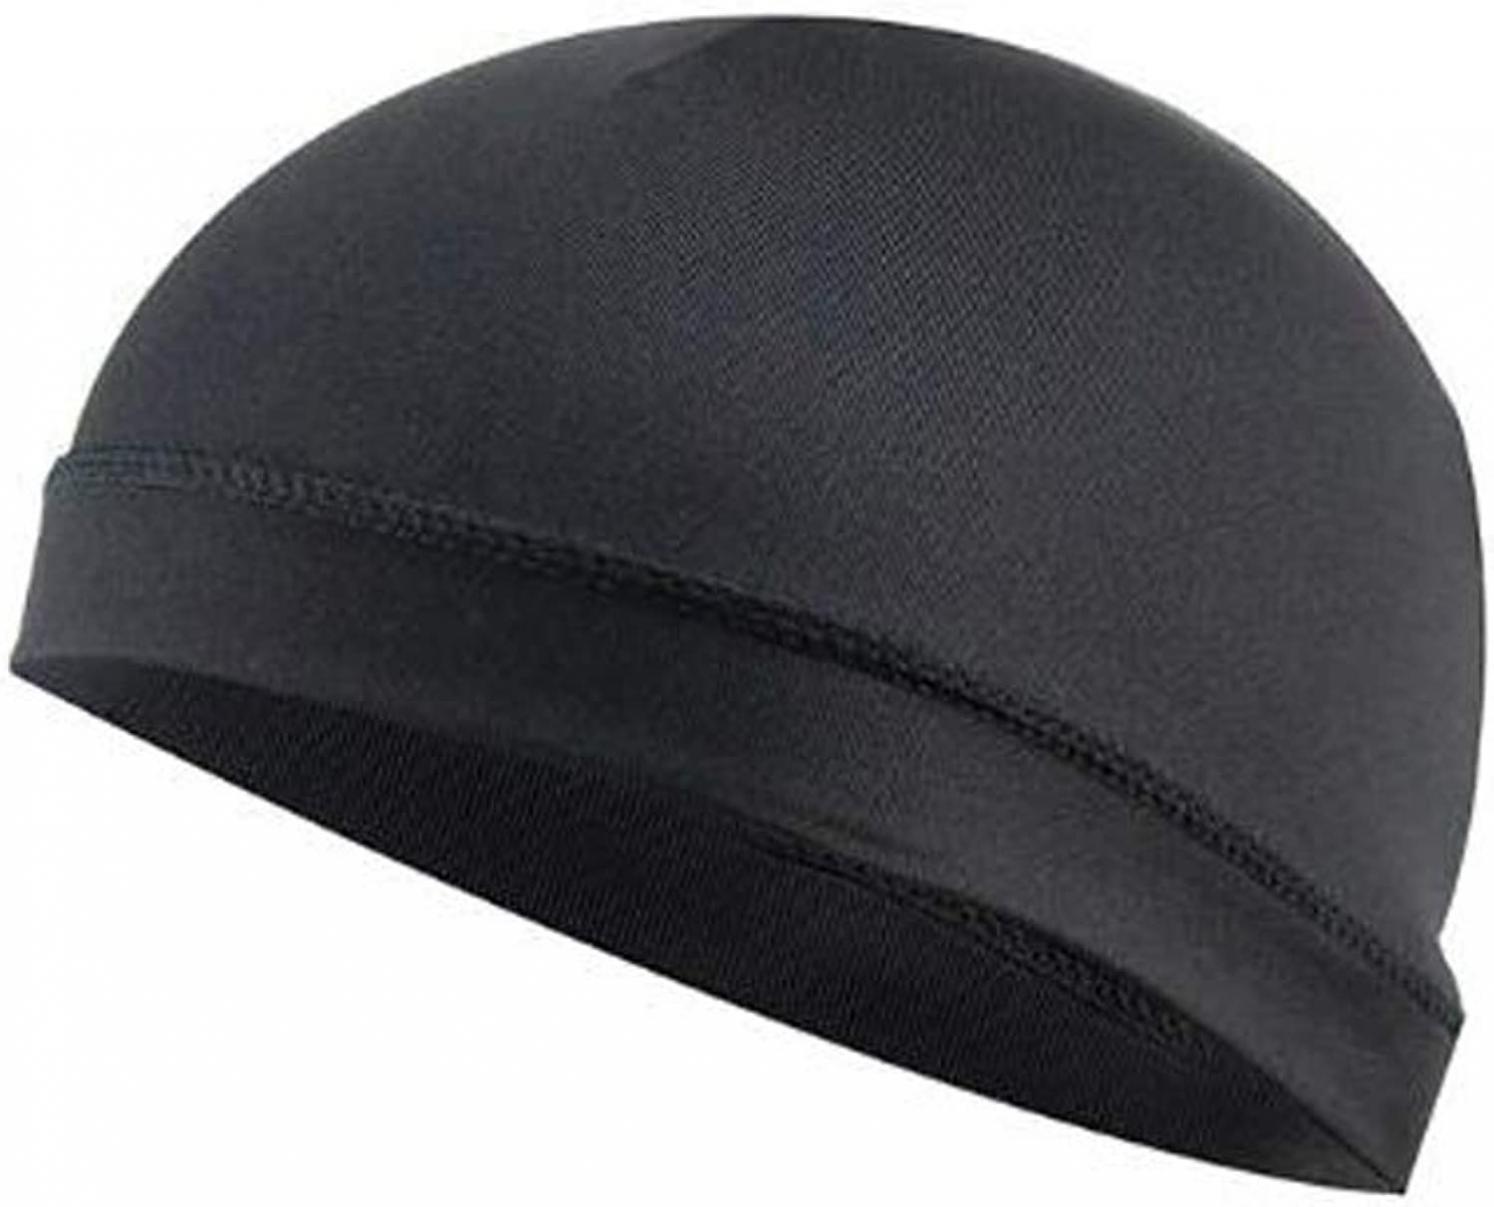 Ewanda store Helmet Skull Caps Sport Cycling Sweat Wicking Helmet Liner Quick Dry Running Hat for Men and Women